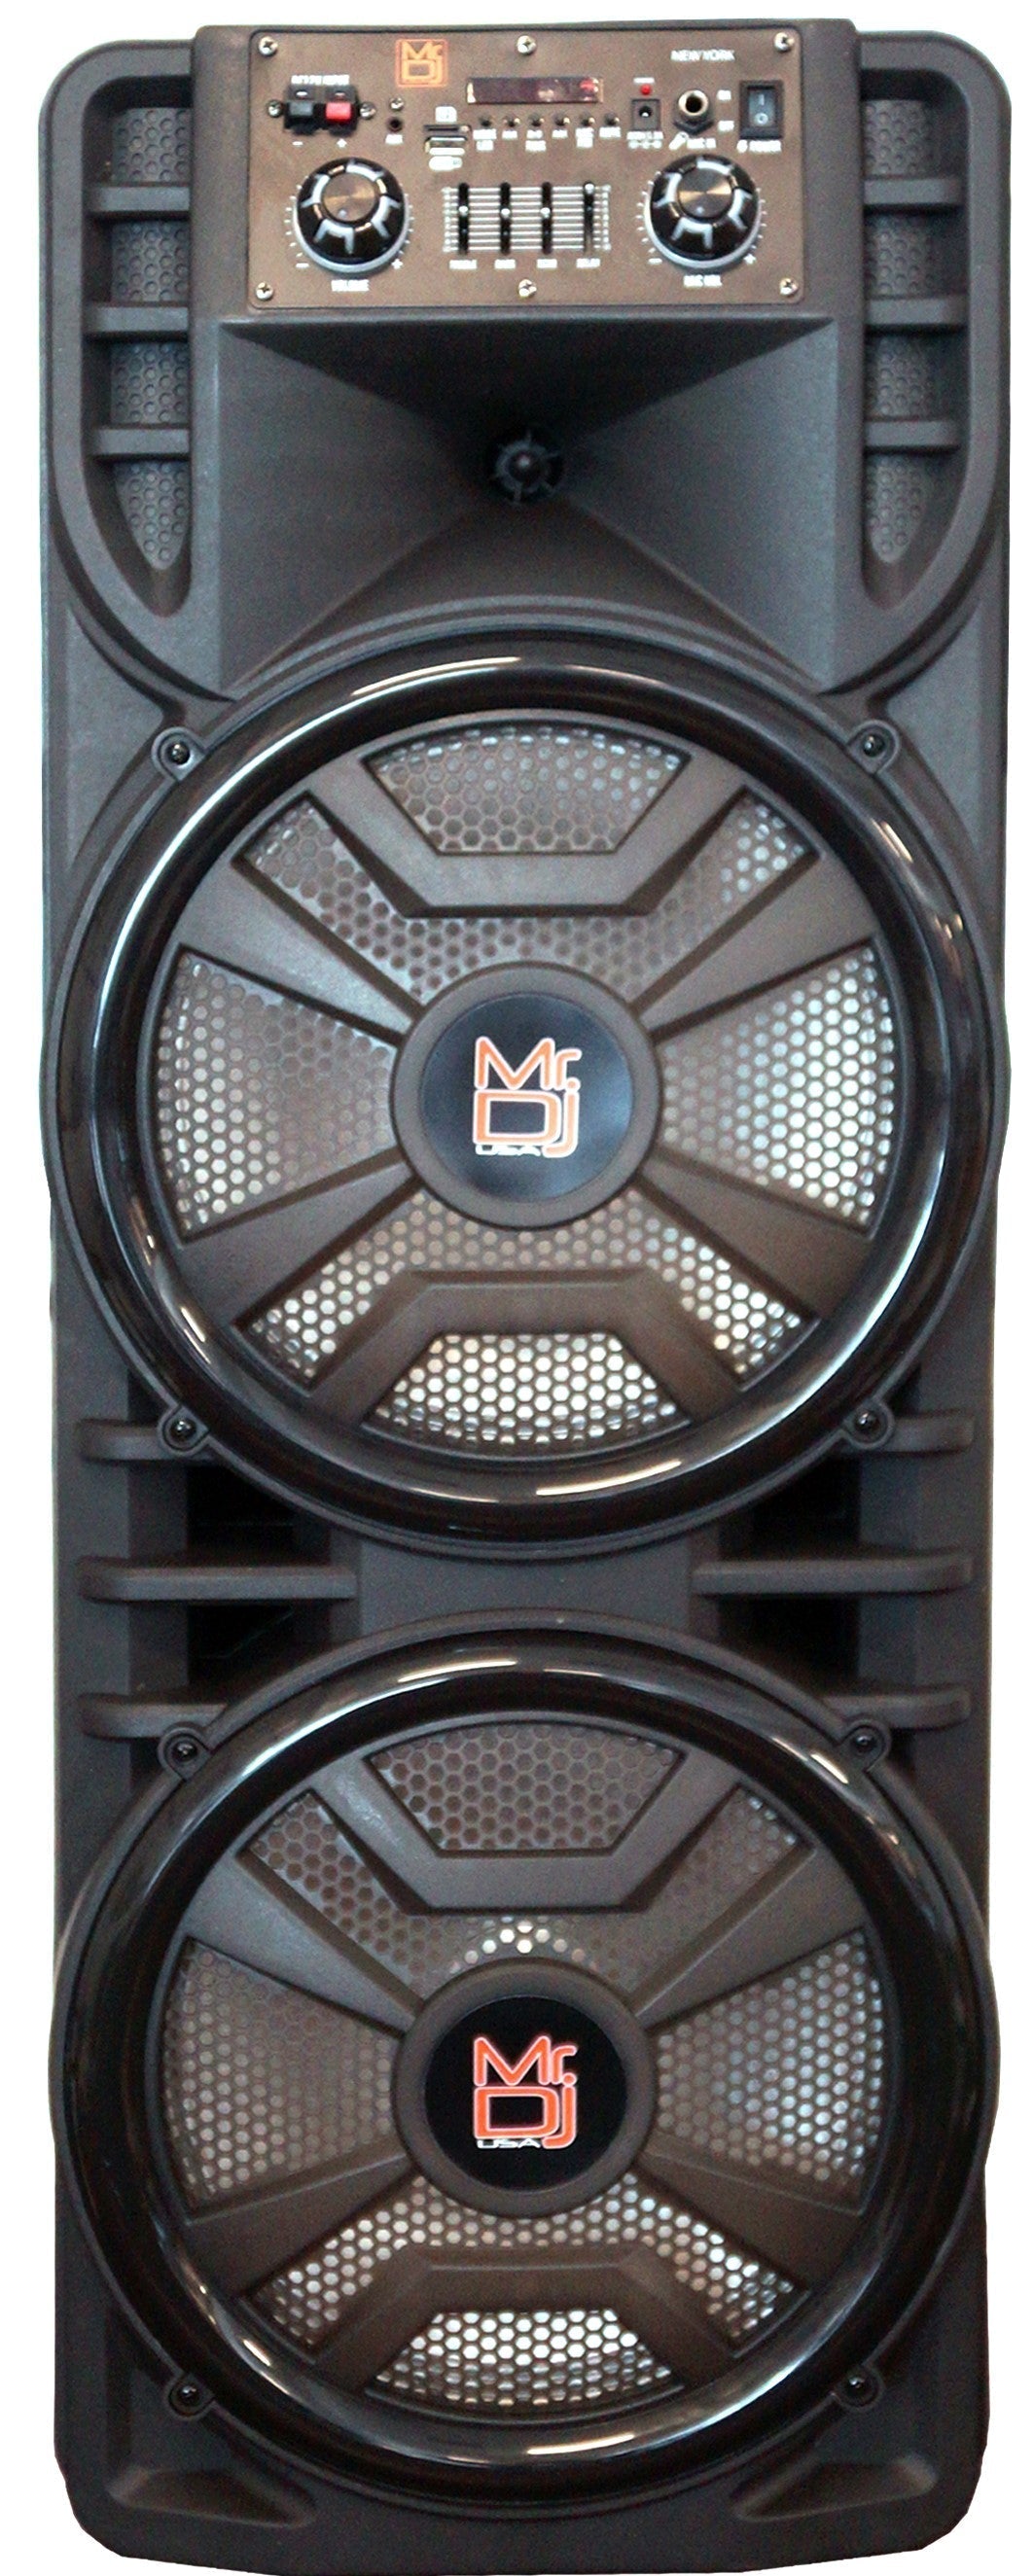 MR DJ NEWYORK+ 12" X 2 Rechargeable Portable Bluetooth Karaoke Speaker with Party Flame Lights Microphone TWS USB FM Radio + 18-LED Moving Head DJ Light